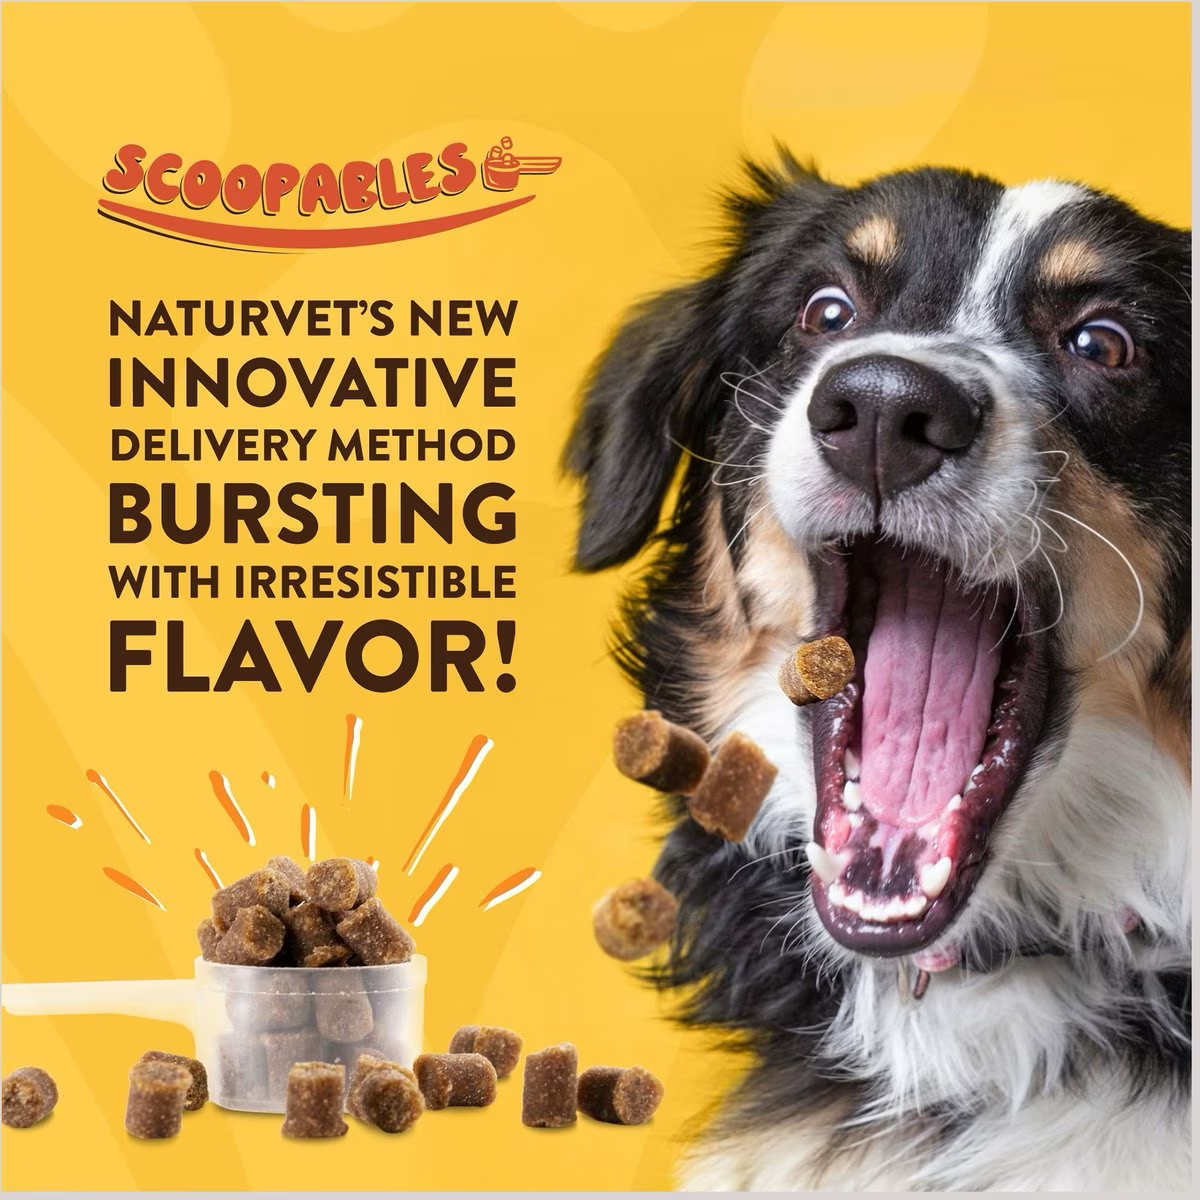 NaturVet Scoopables Quiet Moments Calming Aid Dog Supplement  Health Care  | PetMax Canada